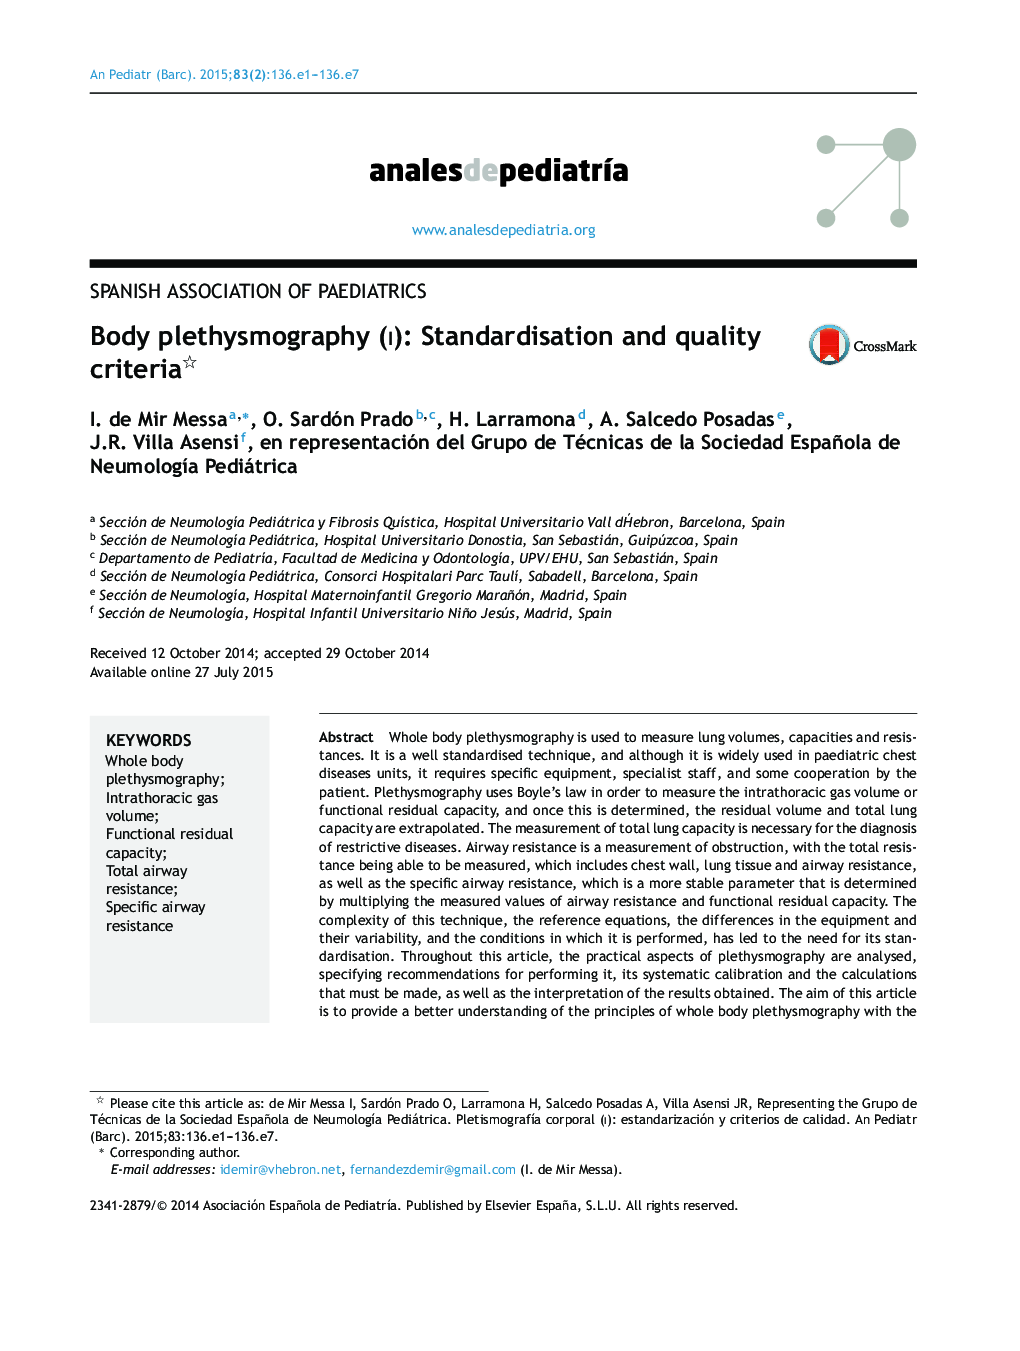 Body plethysmography (i): Standardisation and quality criteria